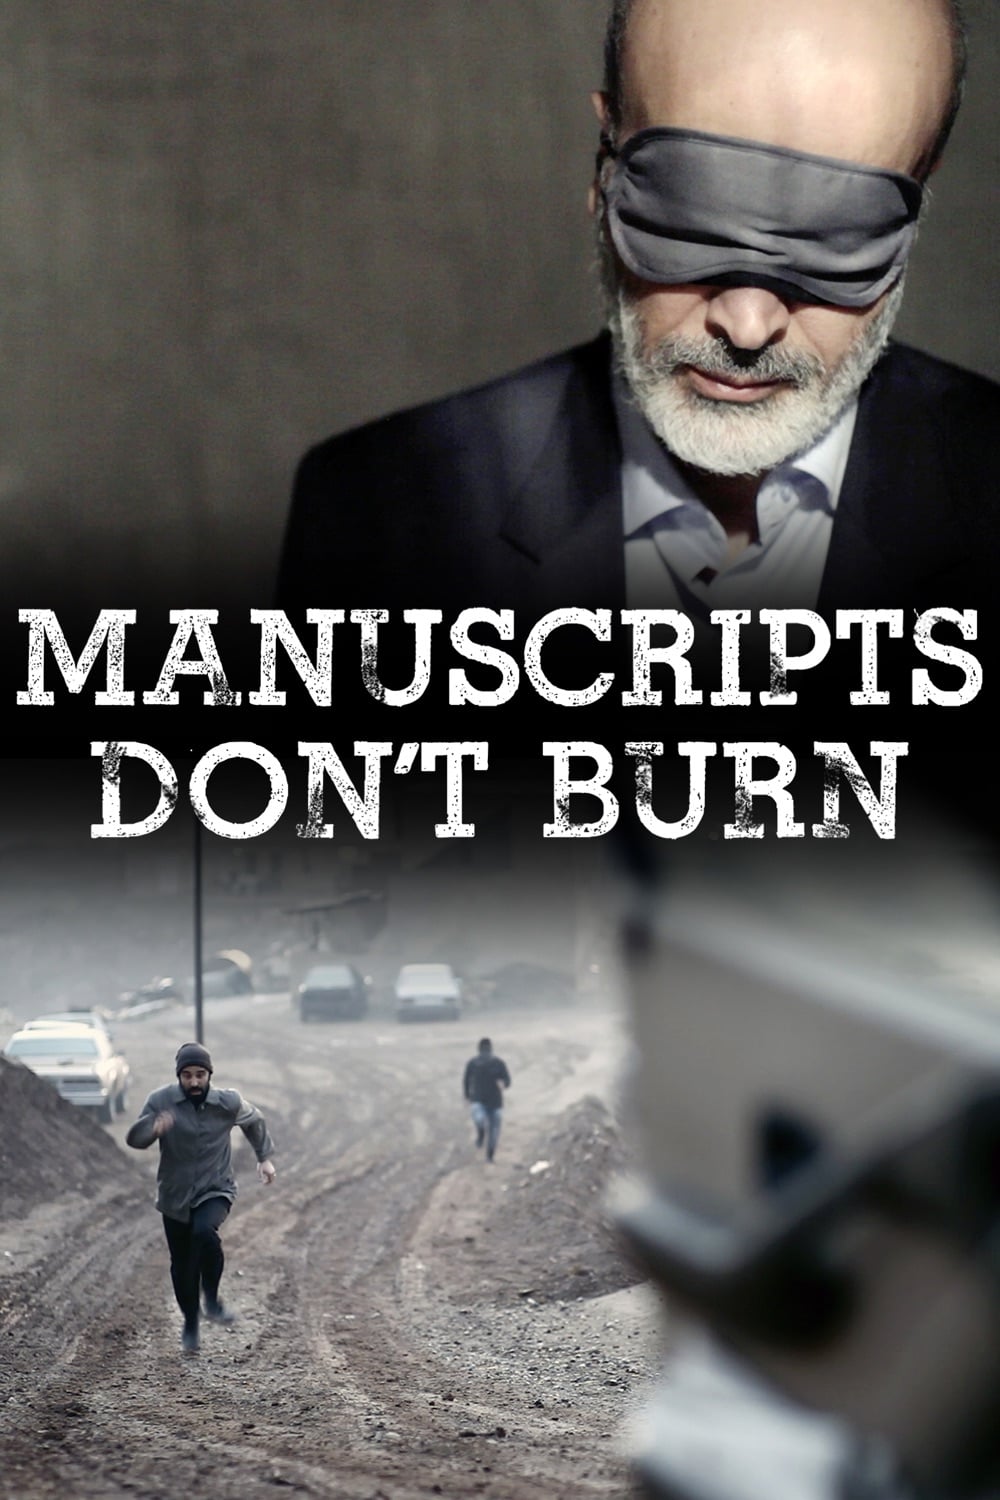 Manuscripts Don't Burn